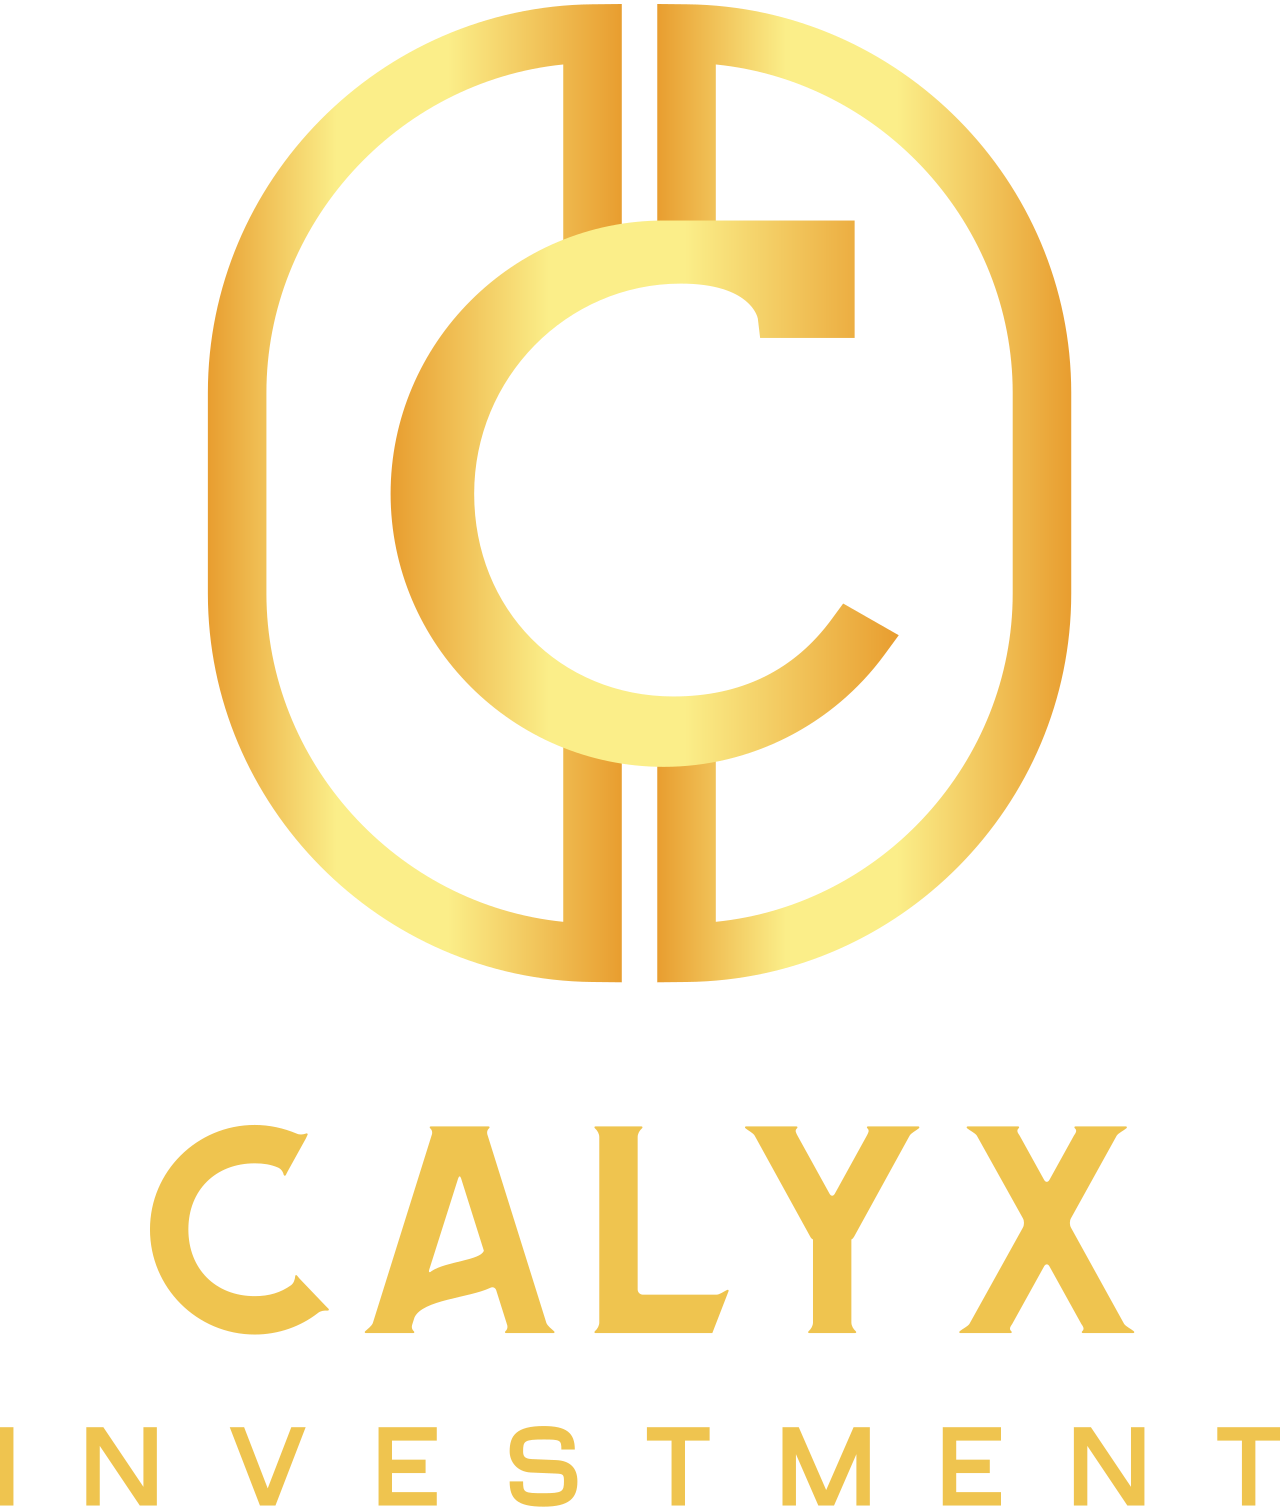 Calyx's web page